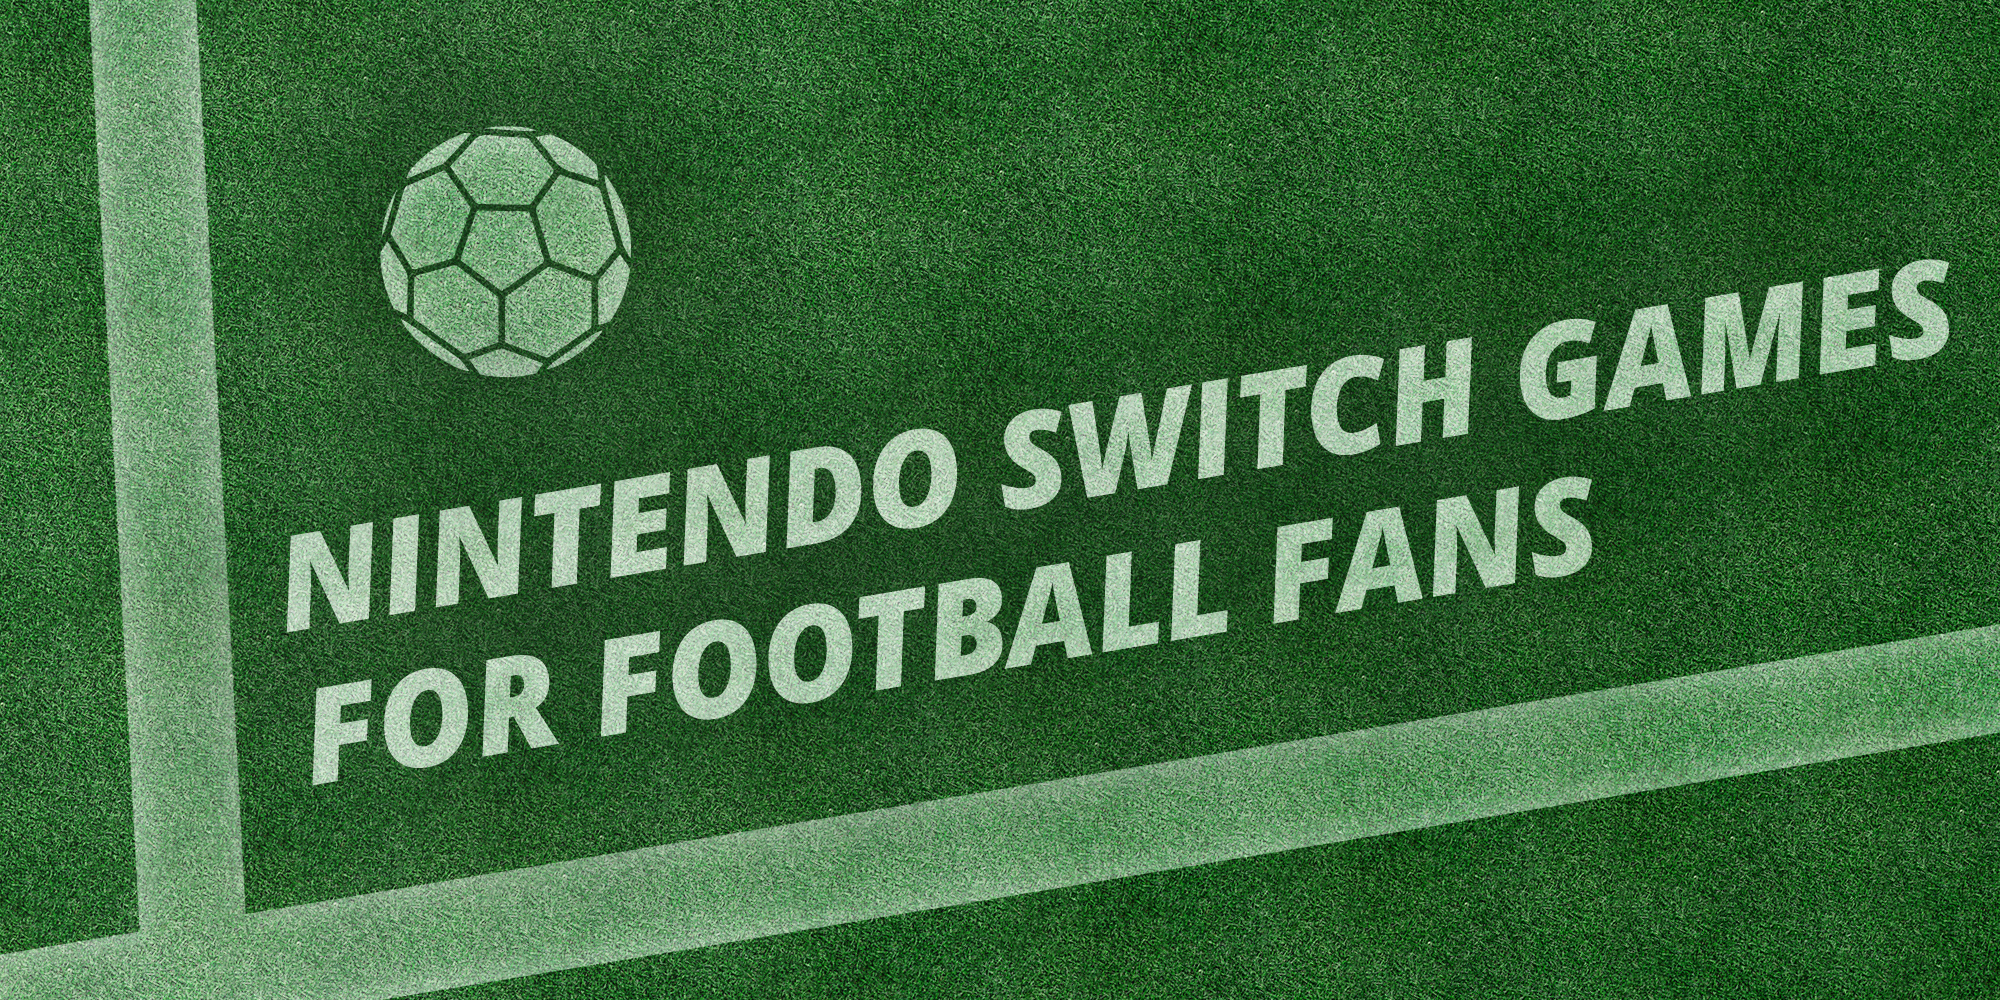 Football Kicks for Nintendo Switch - Nintendo Official Site